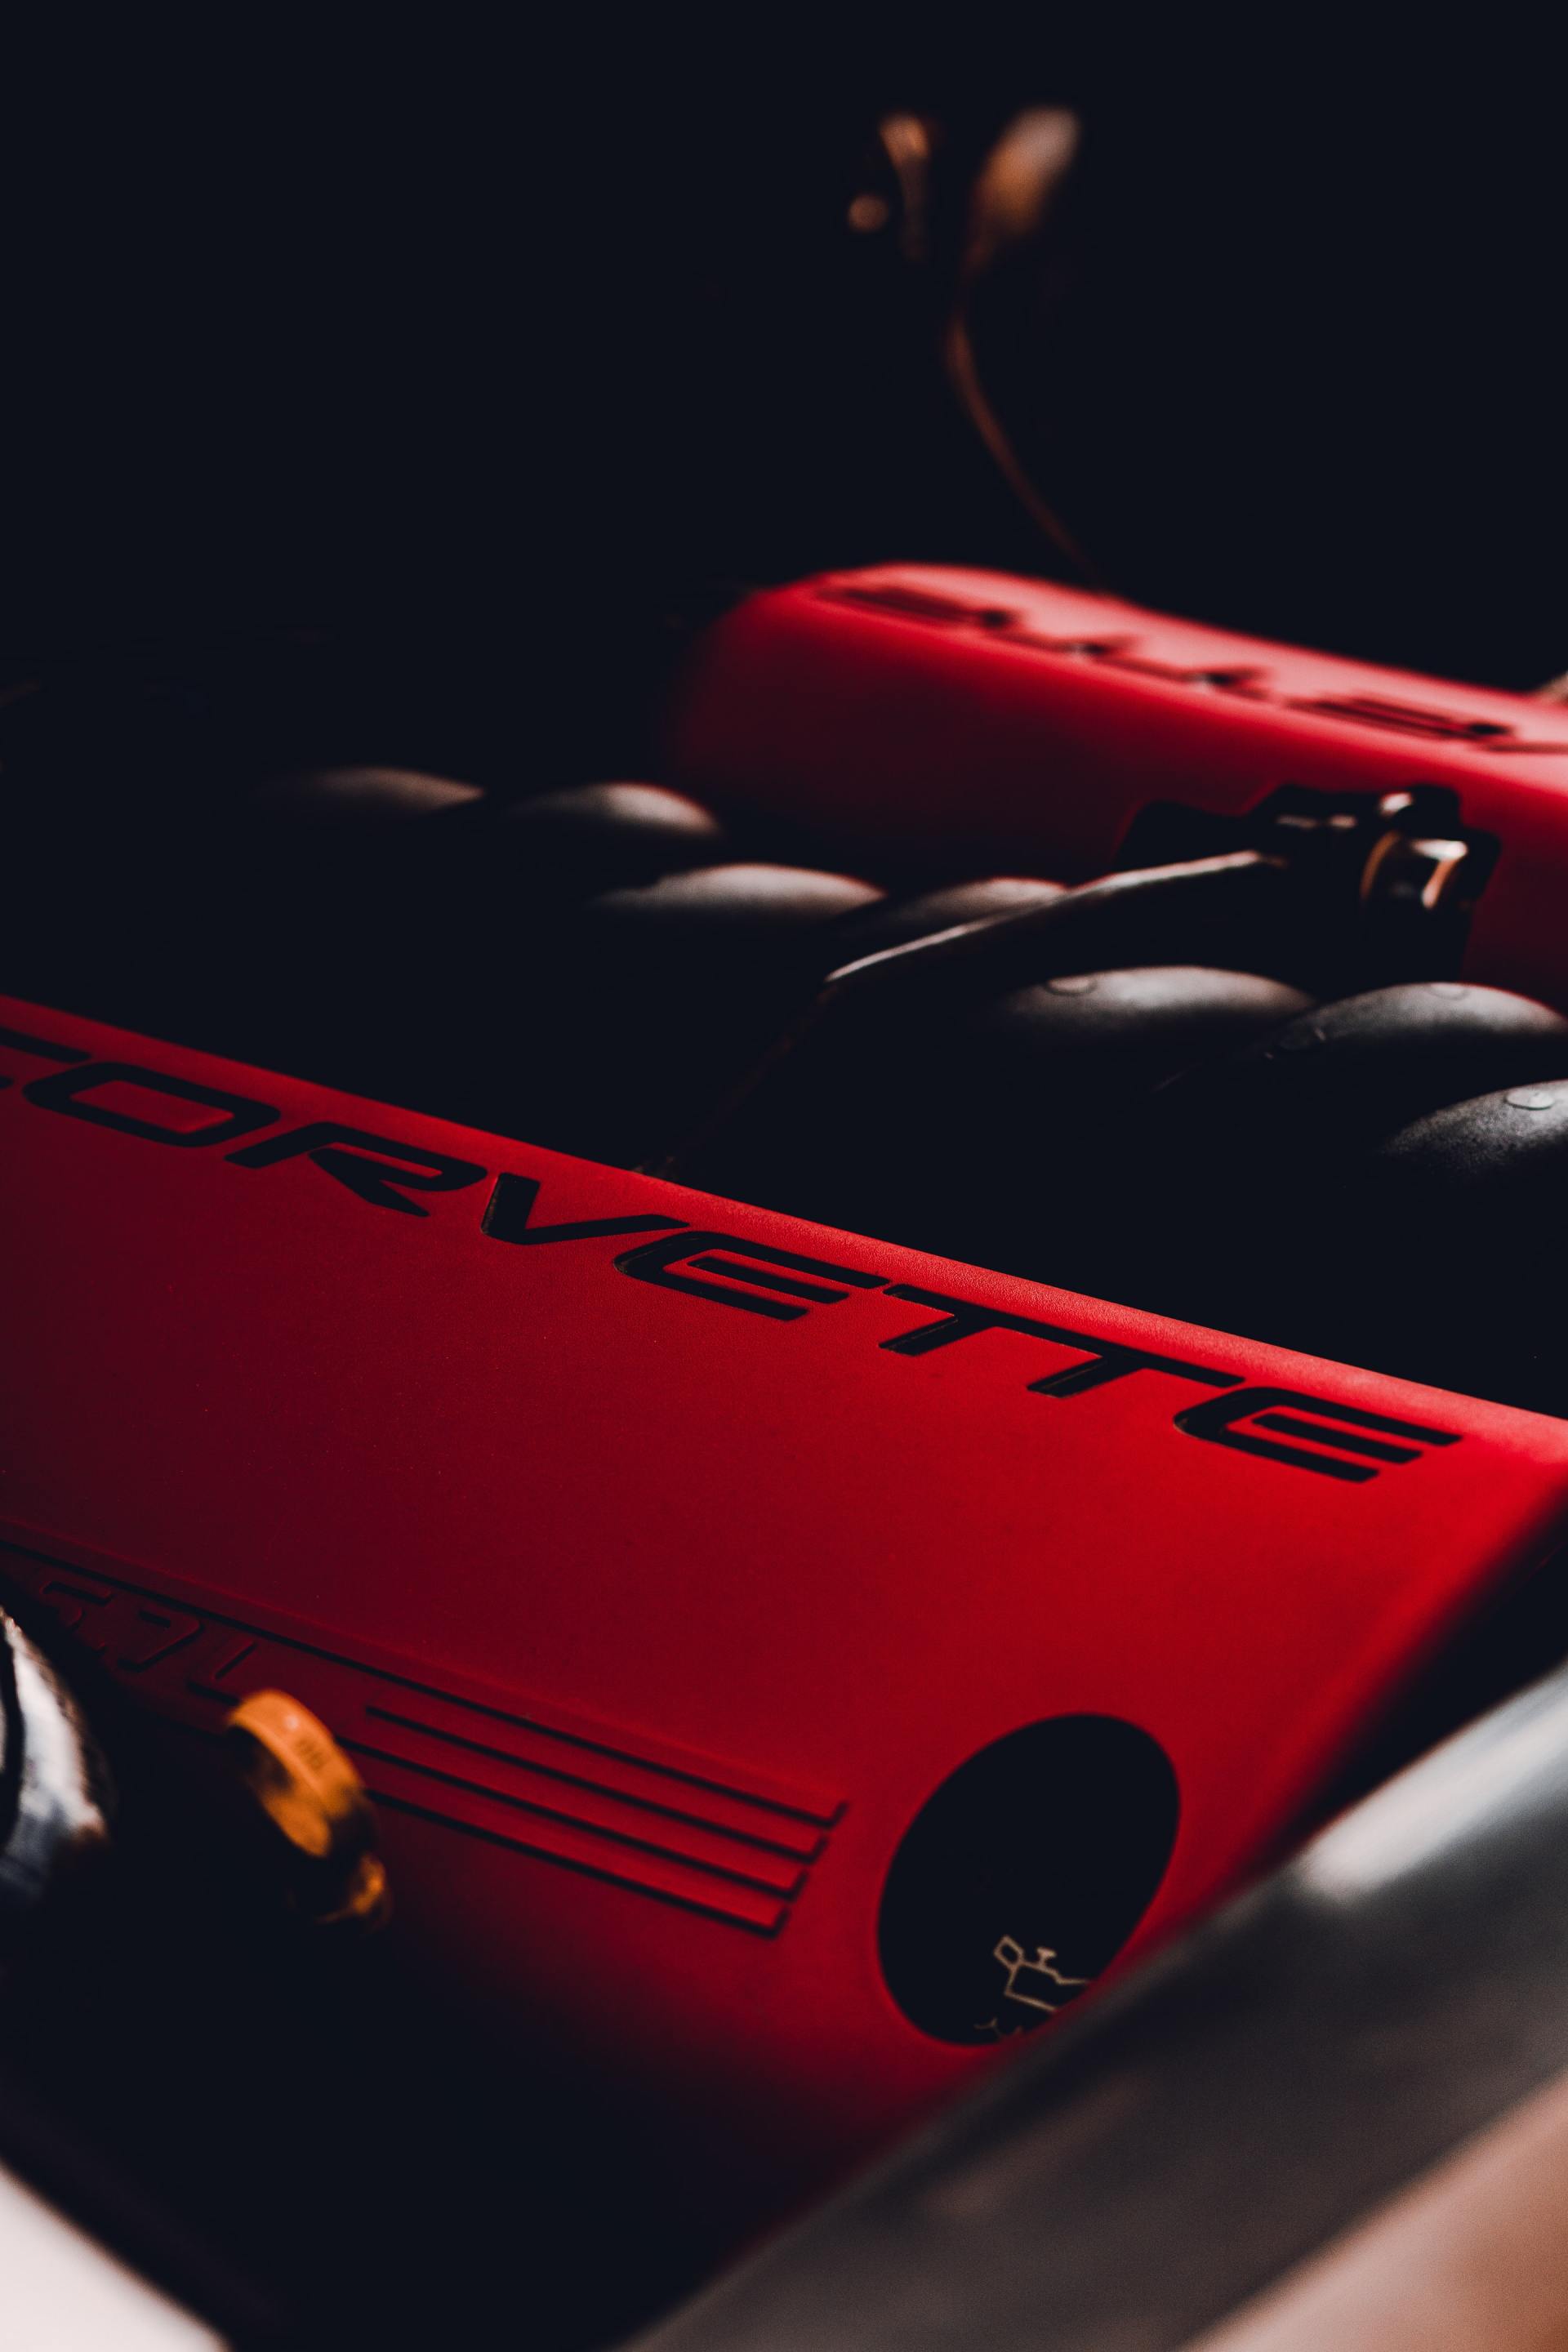 red Corvette engine close up